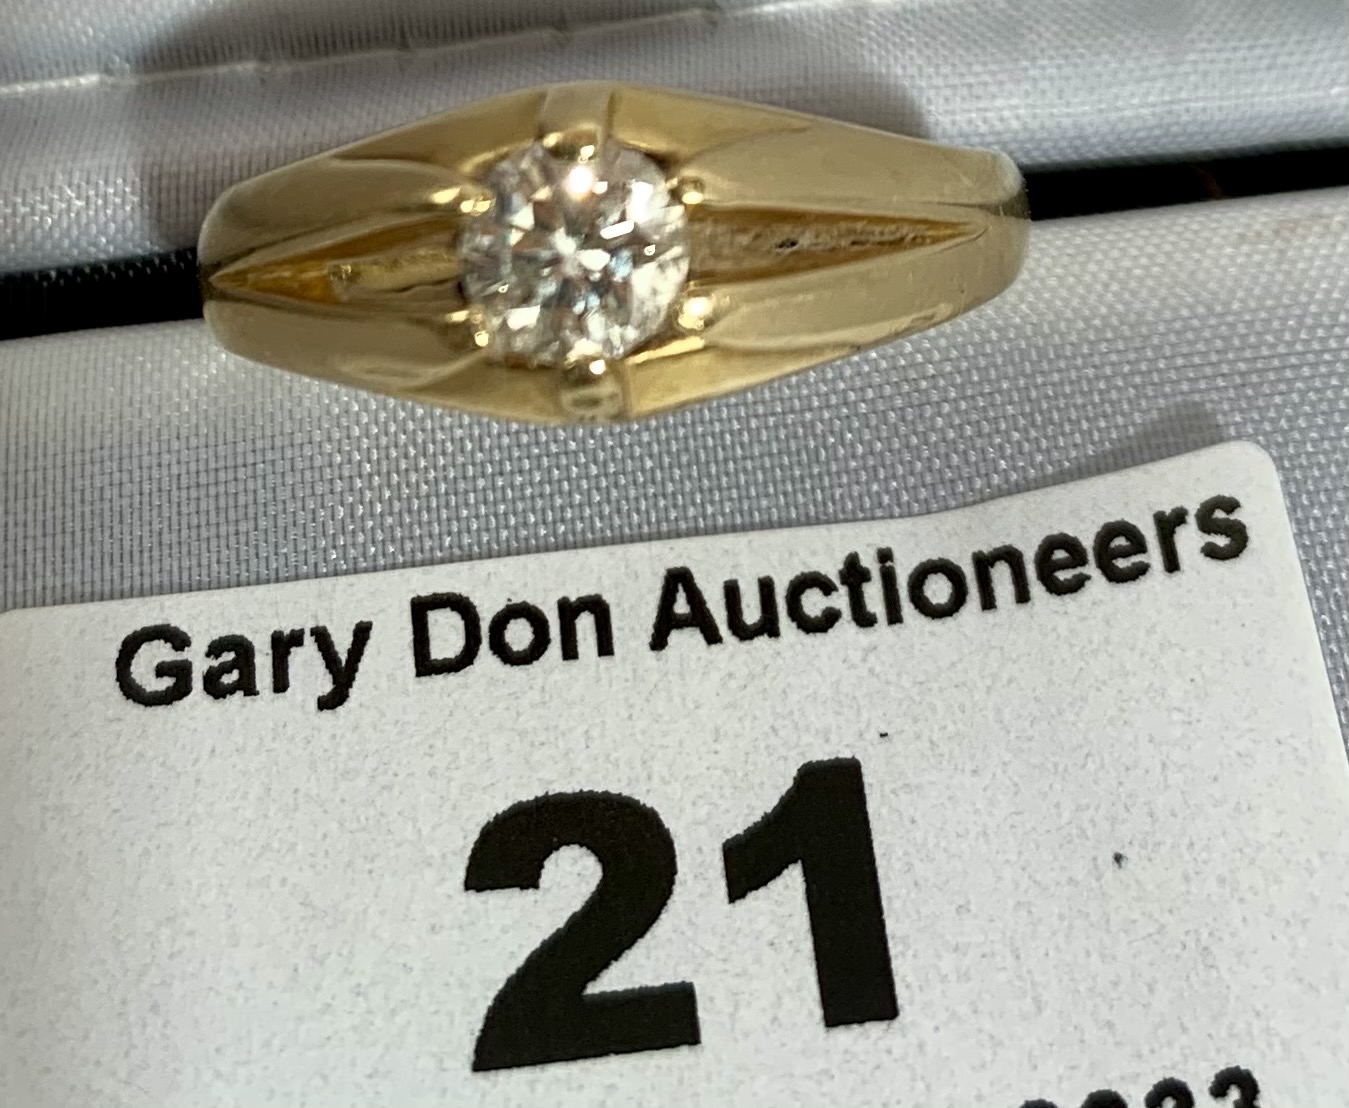 18k gold diamond ring, w: 5.95 grams, size R